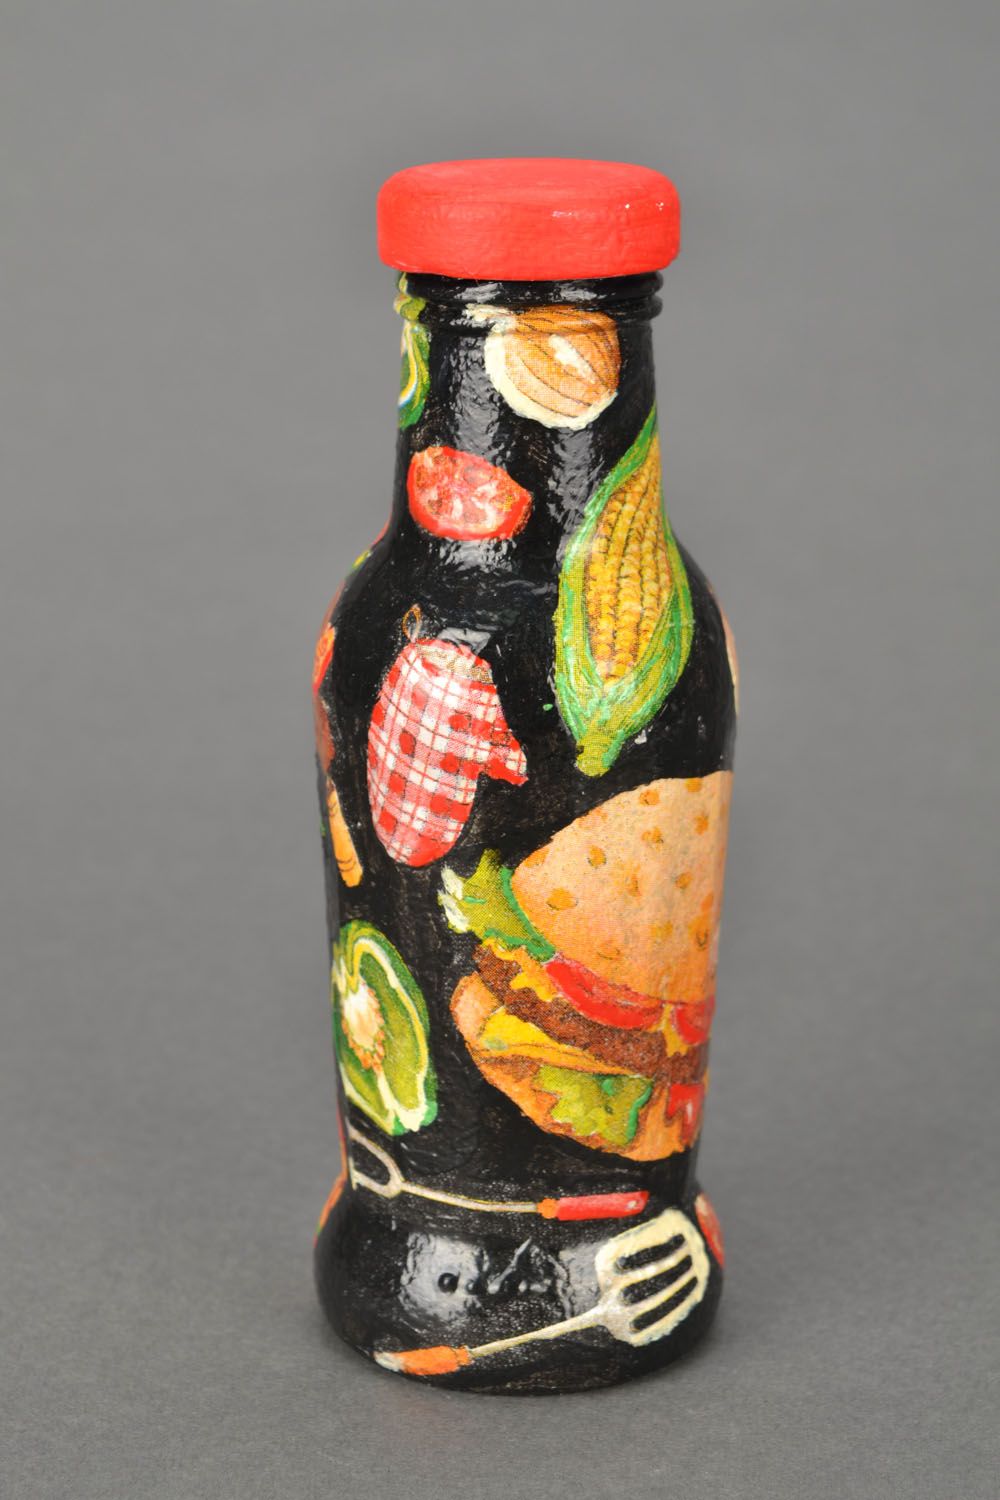 Handmade decorative bottle jar 5 oz with red lid 0,5 lb photo 1